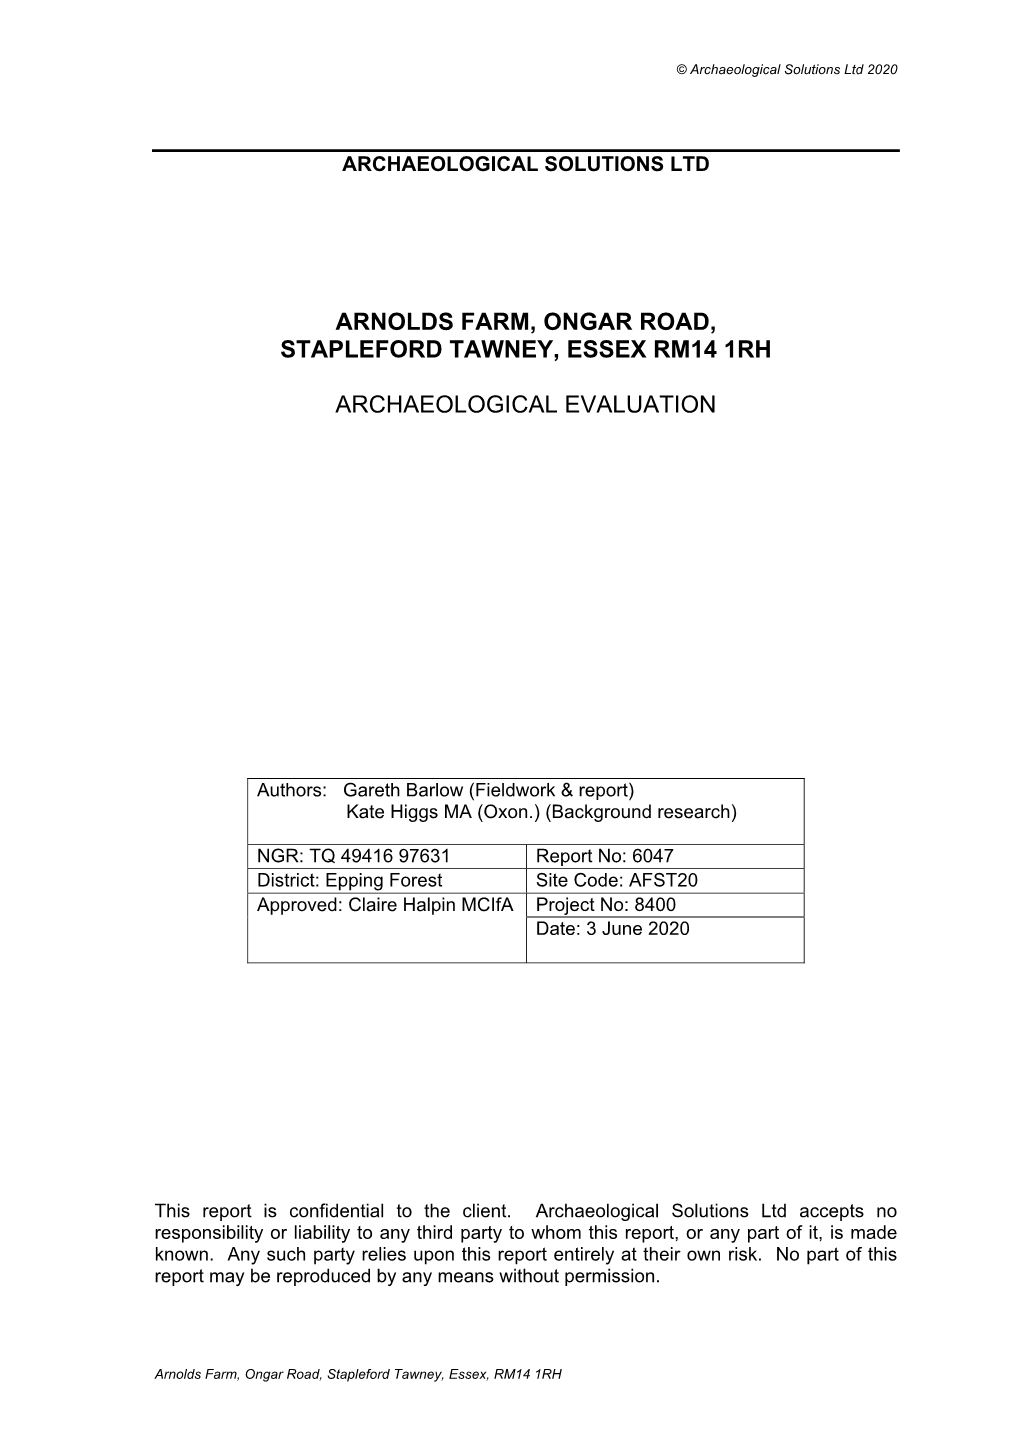 Arnolds Farm, Ongar Road, Stapleford Tawney, Essex Rm14 1Rh Archaeological Evaluation